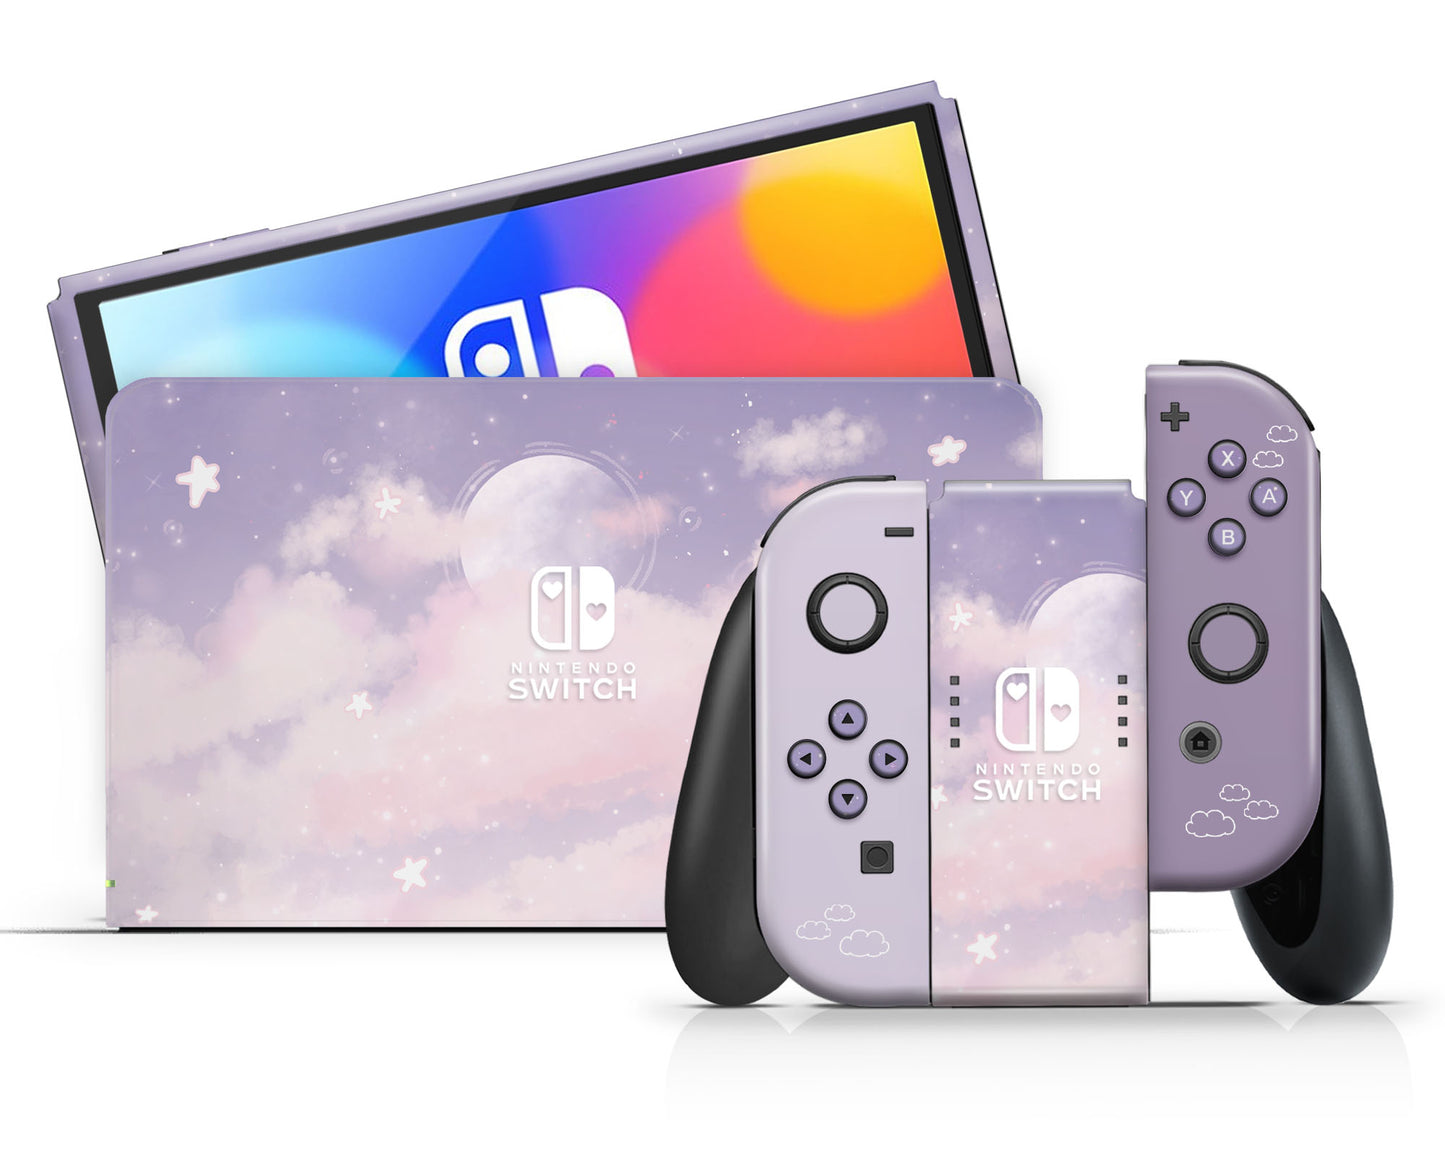 Purple Clouds Nintendo Switch OLED Skin